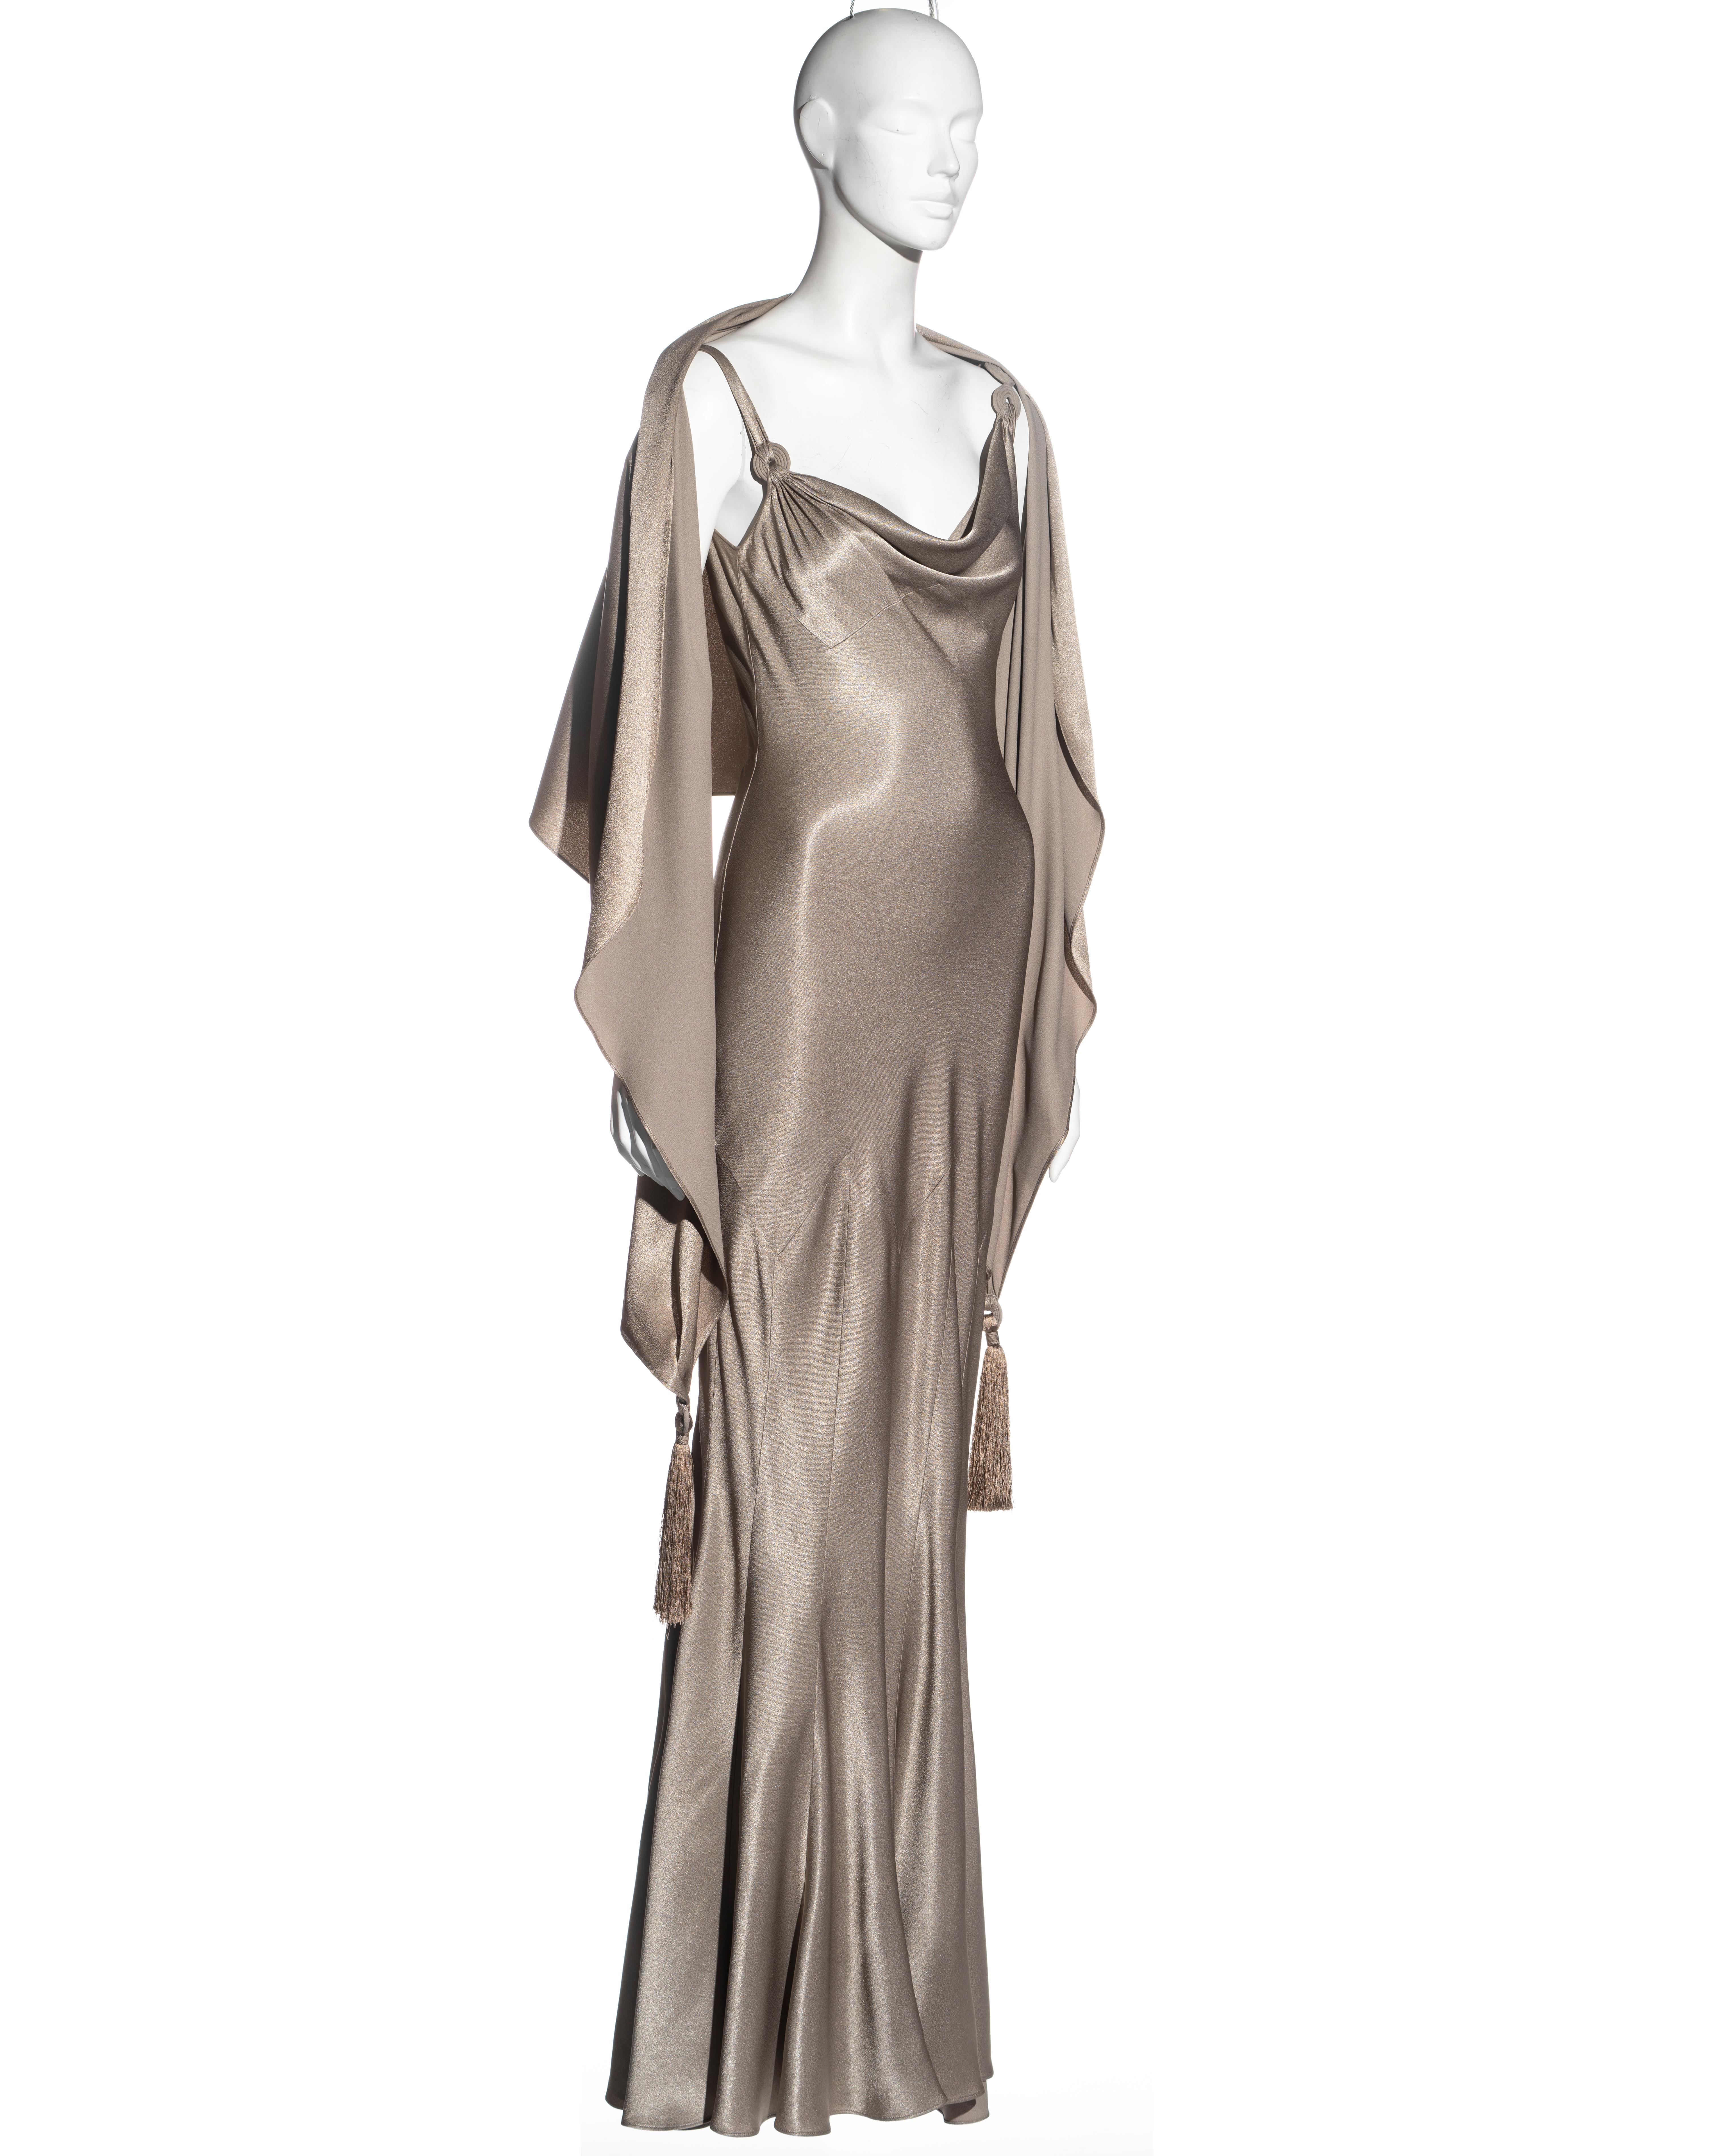 Women's John Galliano taupe crepe satin bias-cut evening dress and shawl, ss 2000